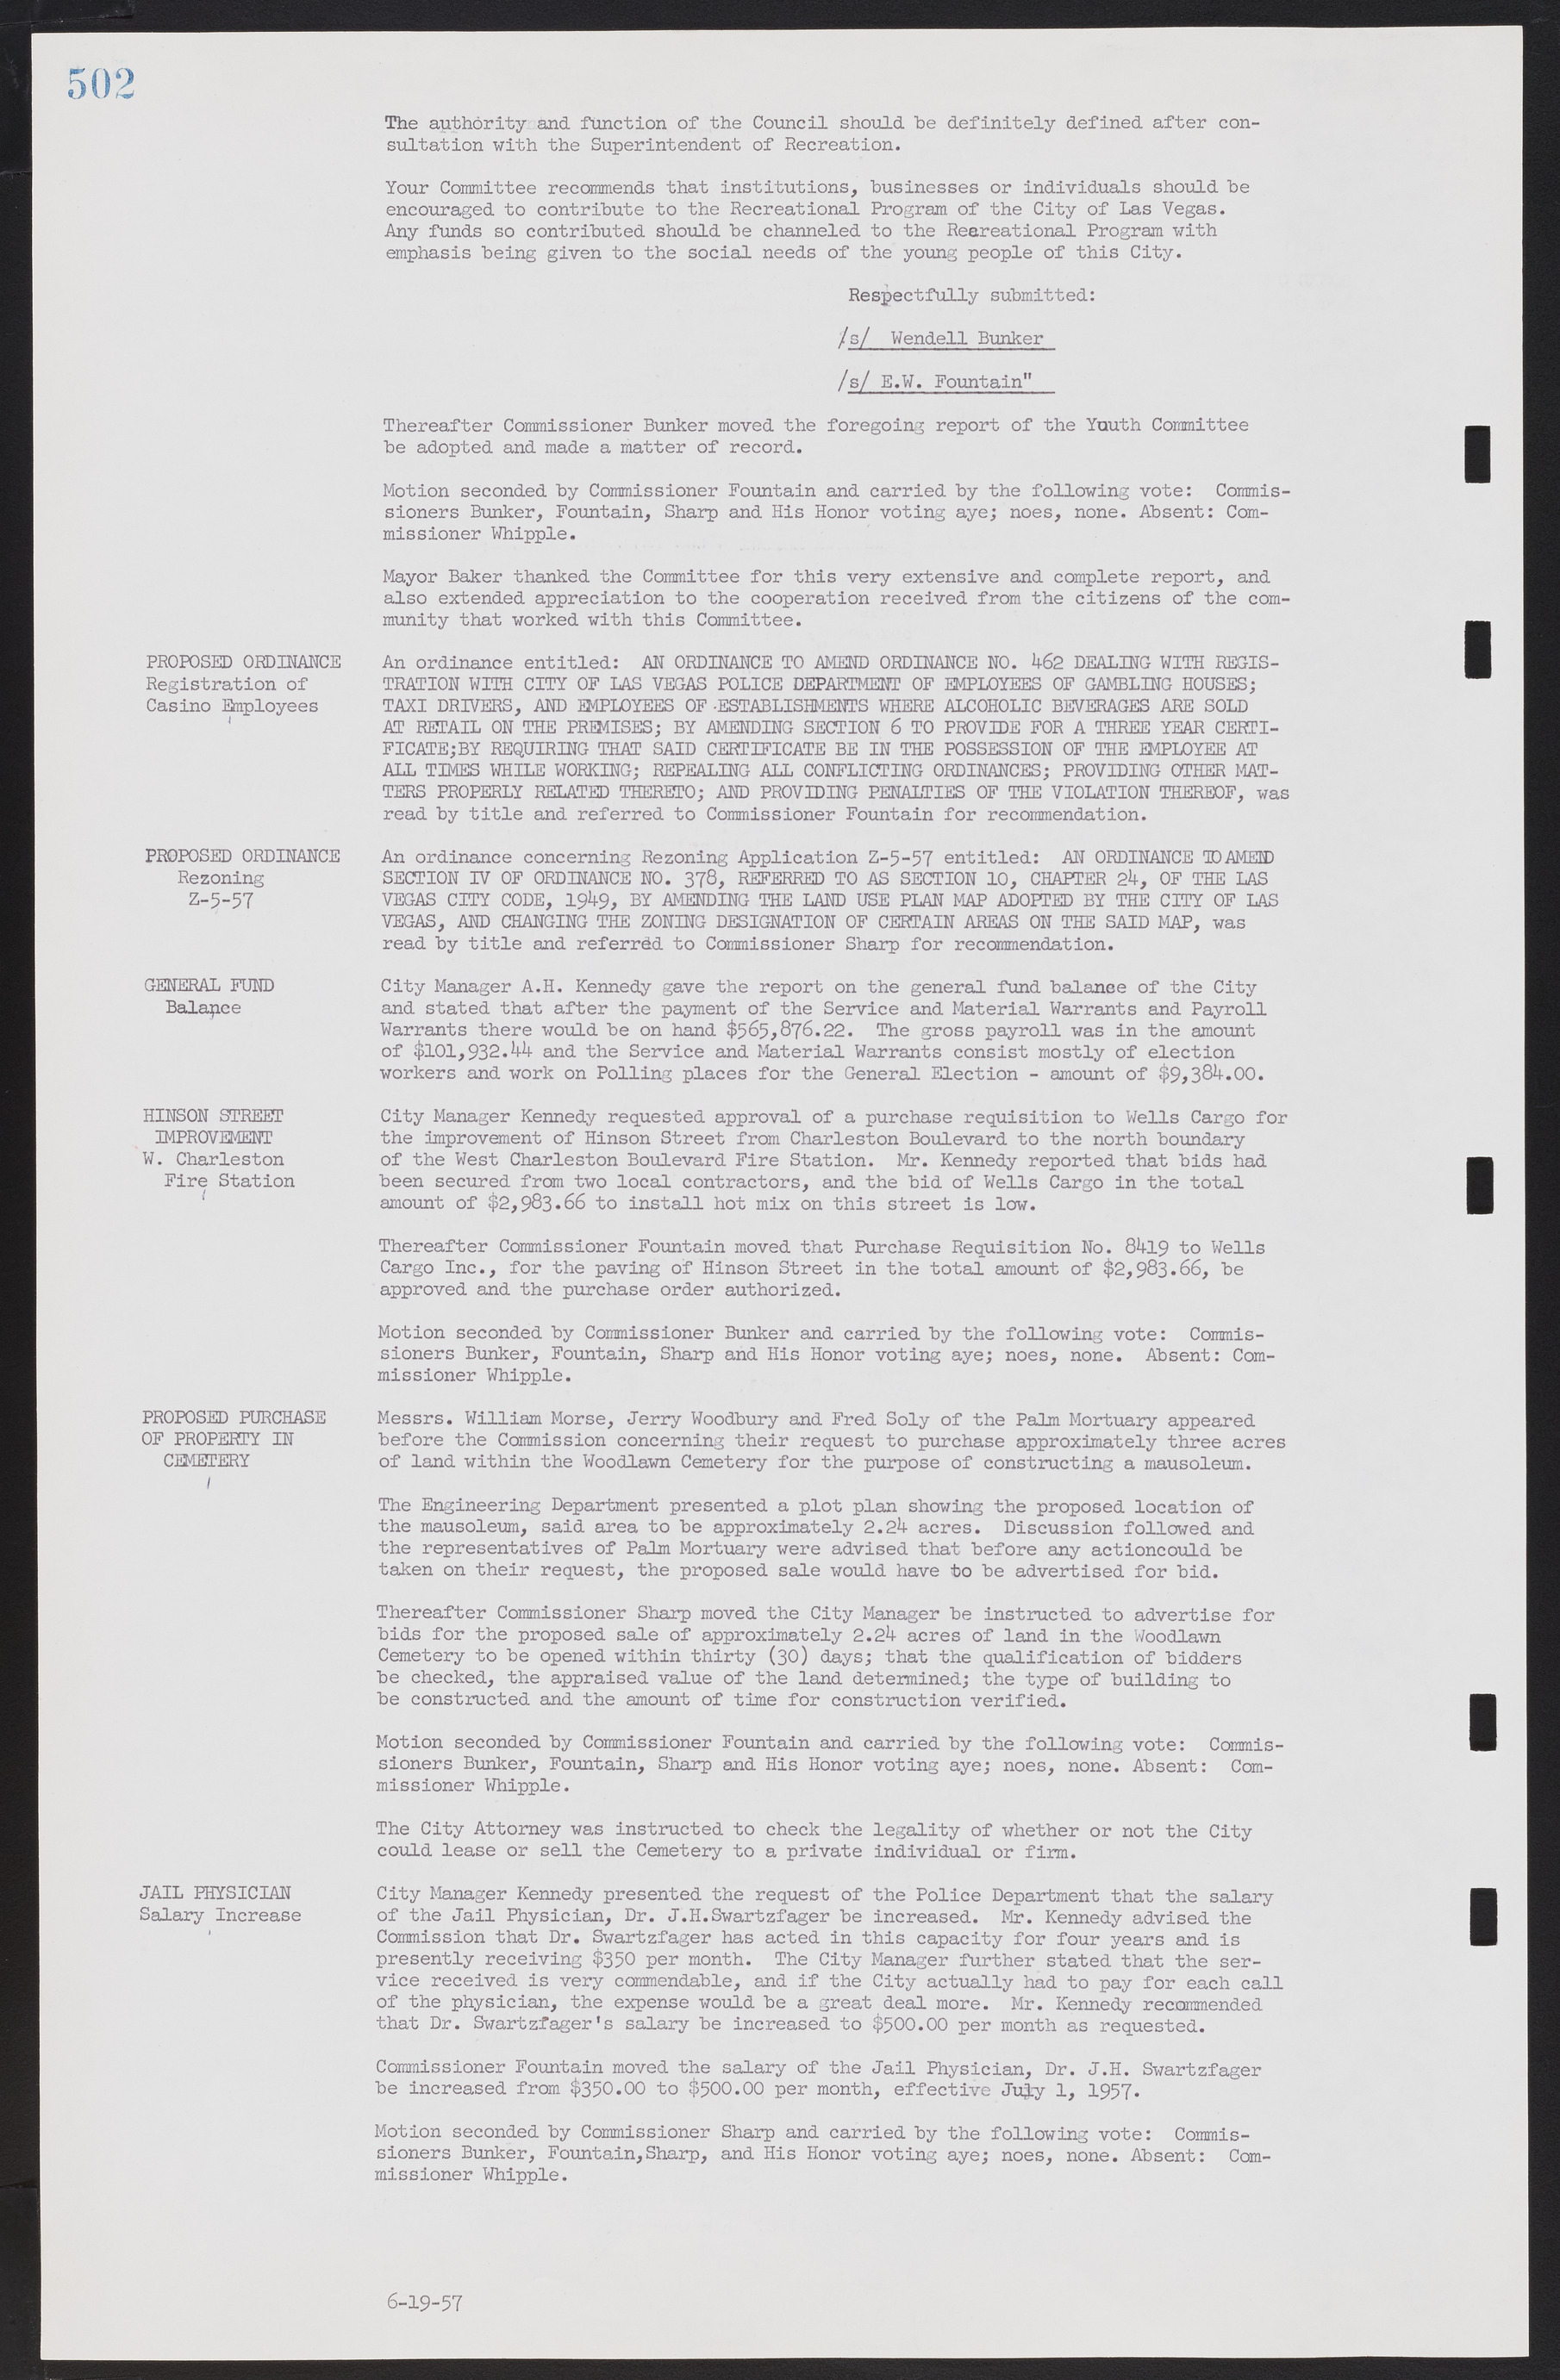 Las Vegas City Commission Minutes, September 21, 1955 to November 20, 1957, lvc000010-522